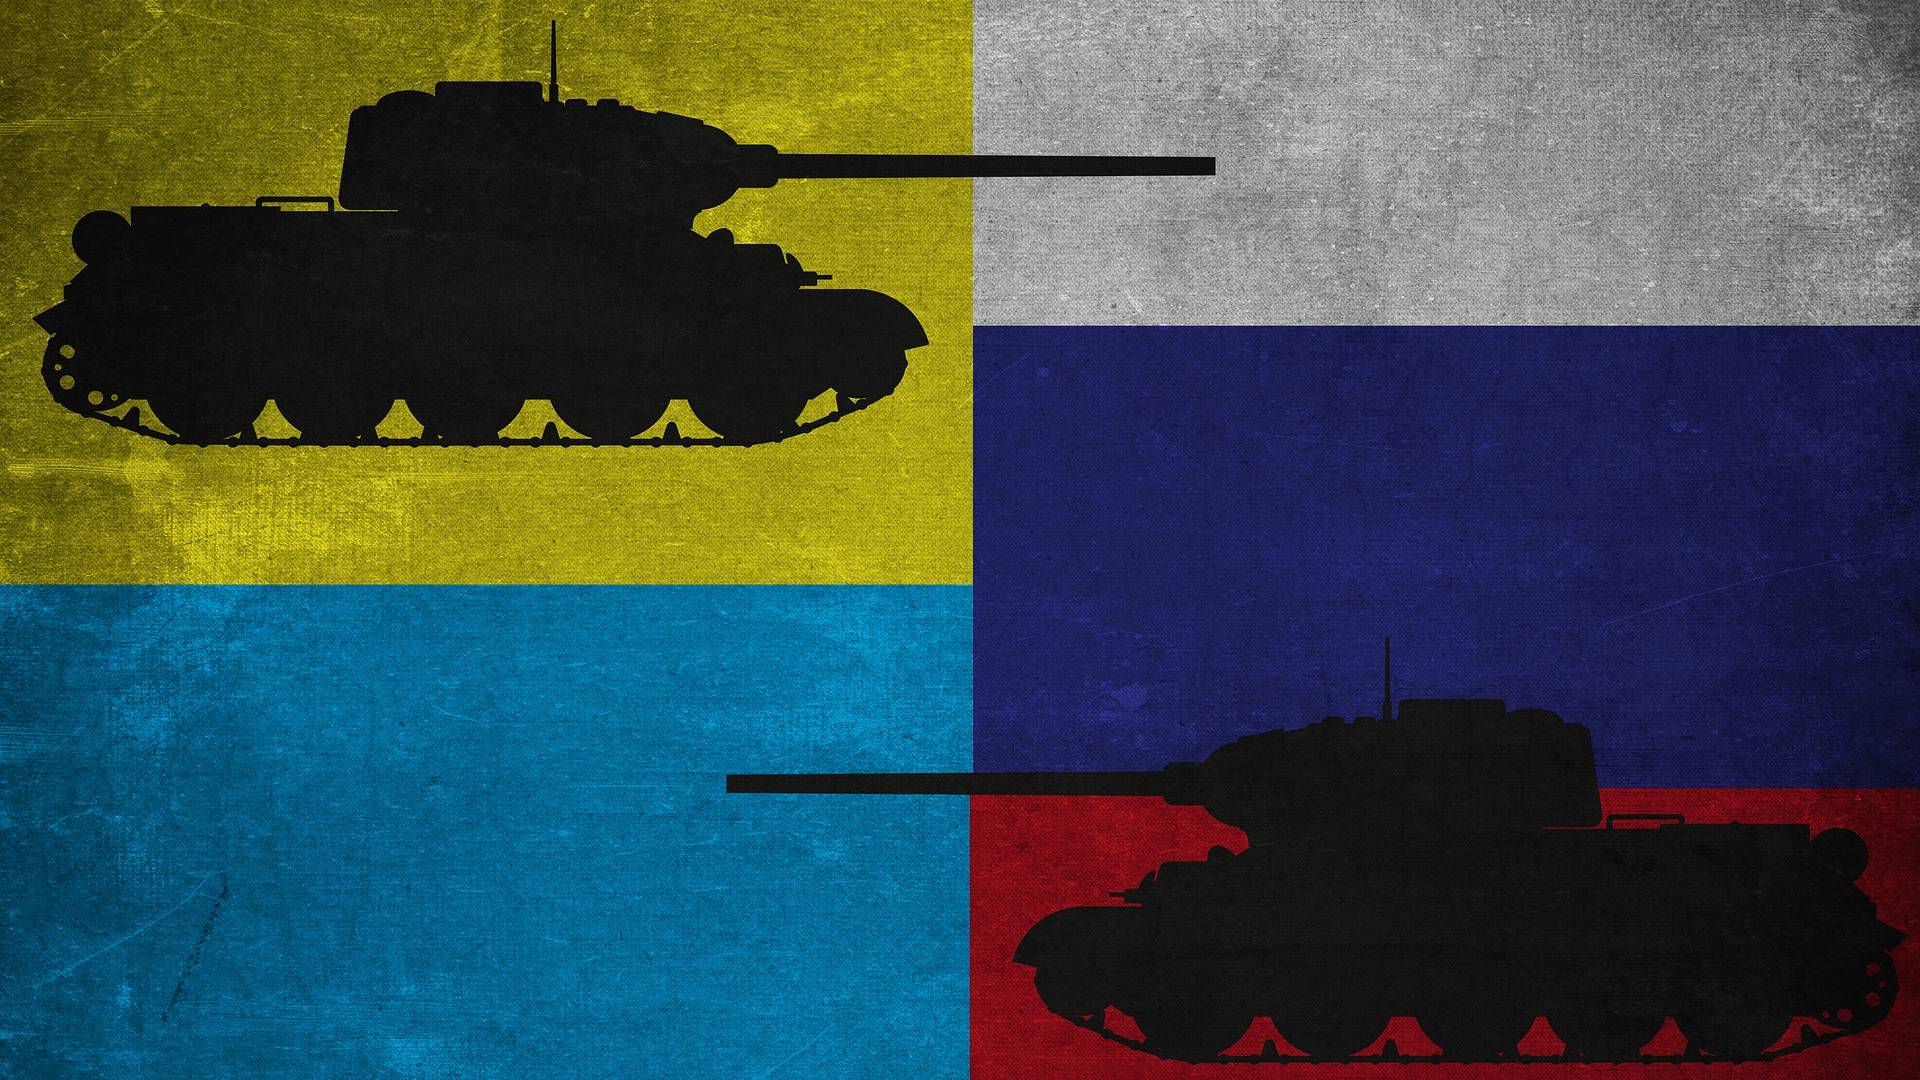 Ukraine wants to liberate Crimea, destroy the Russian Black Sea Fleet